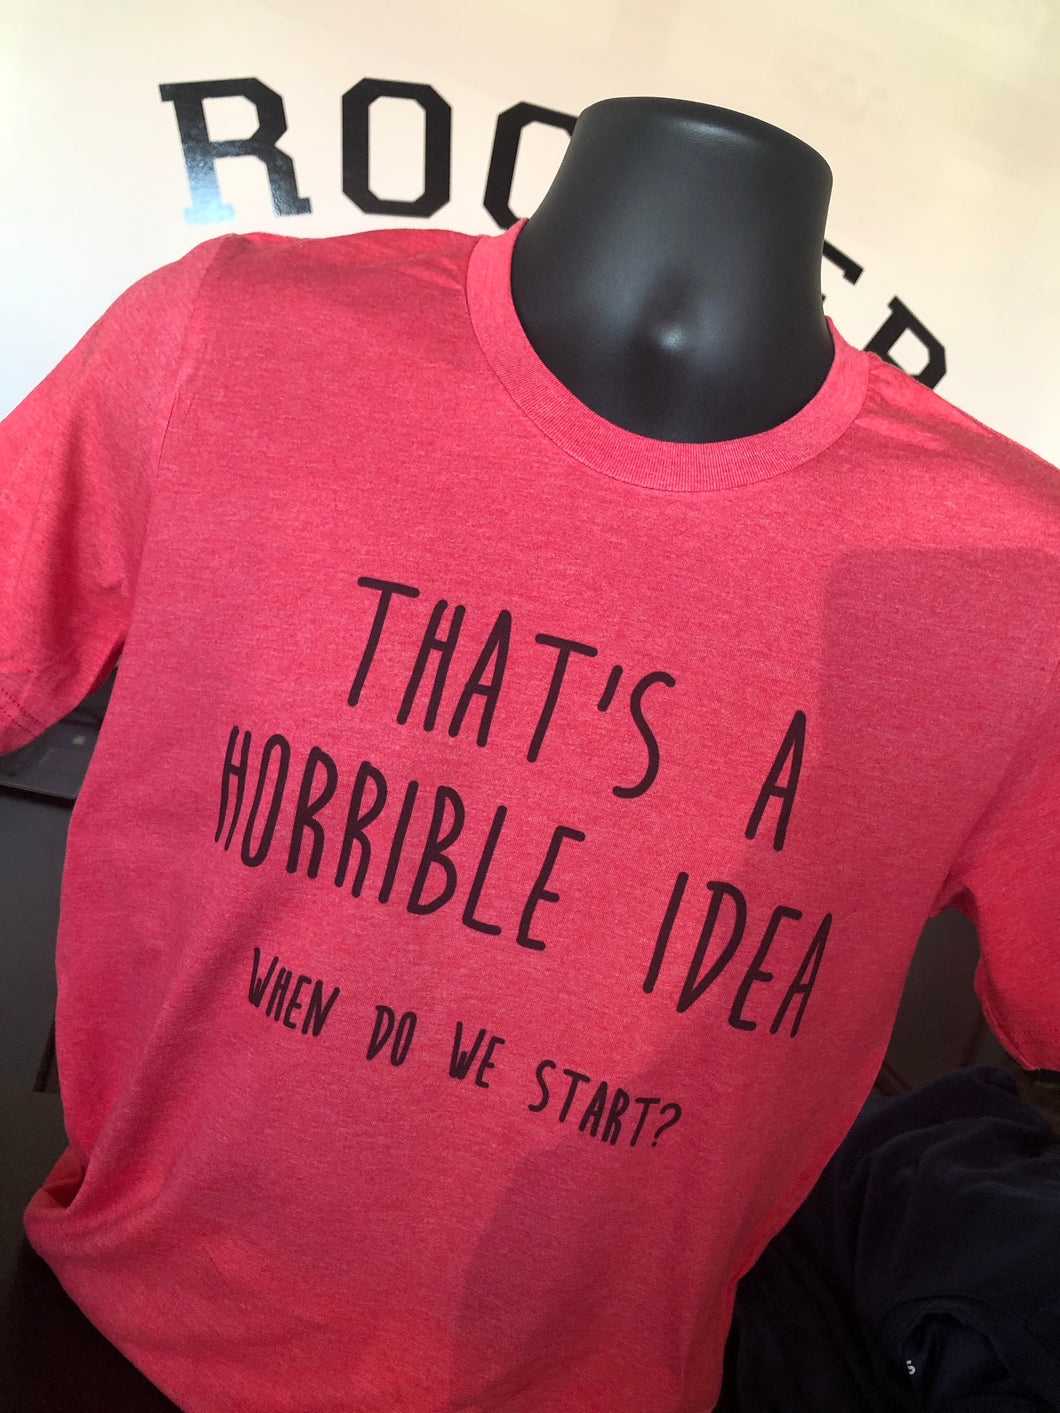 That's a Horrible Idea -T-shirt